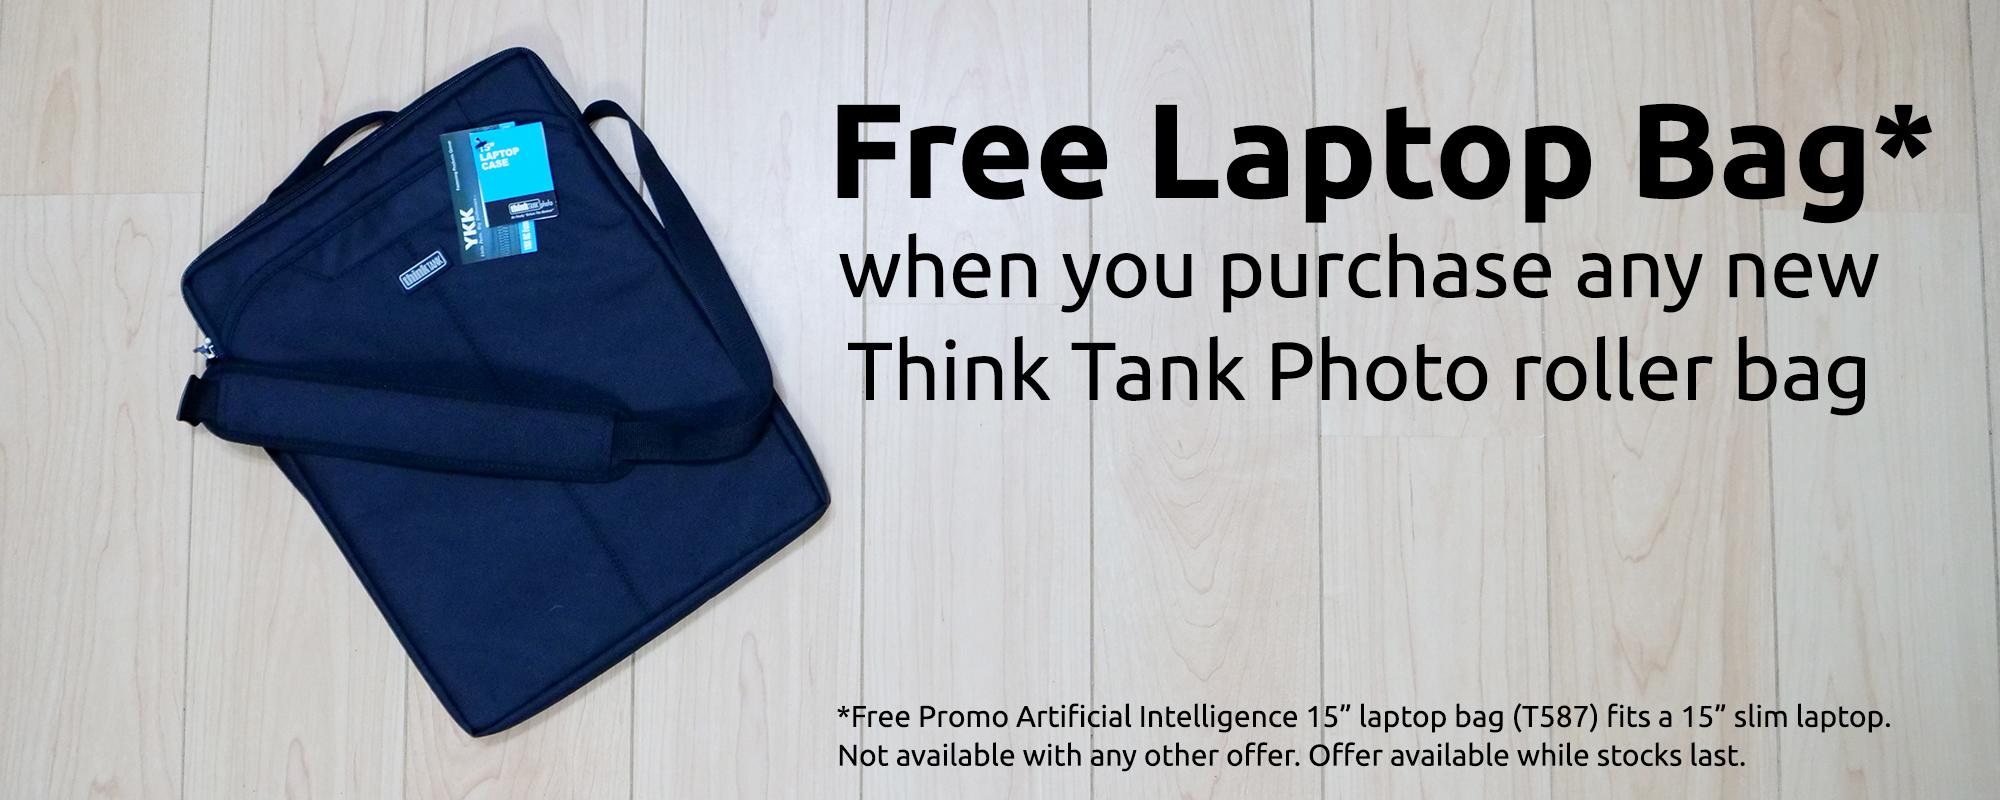 Free Laptop Bag Offer